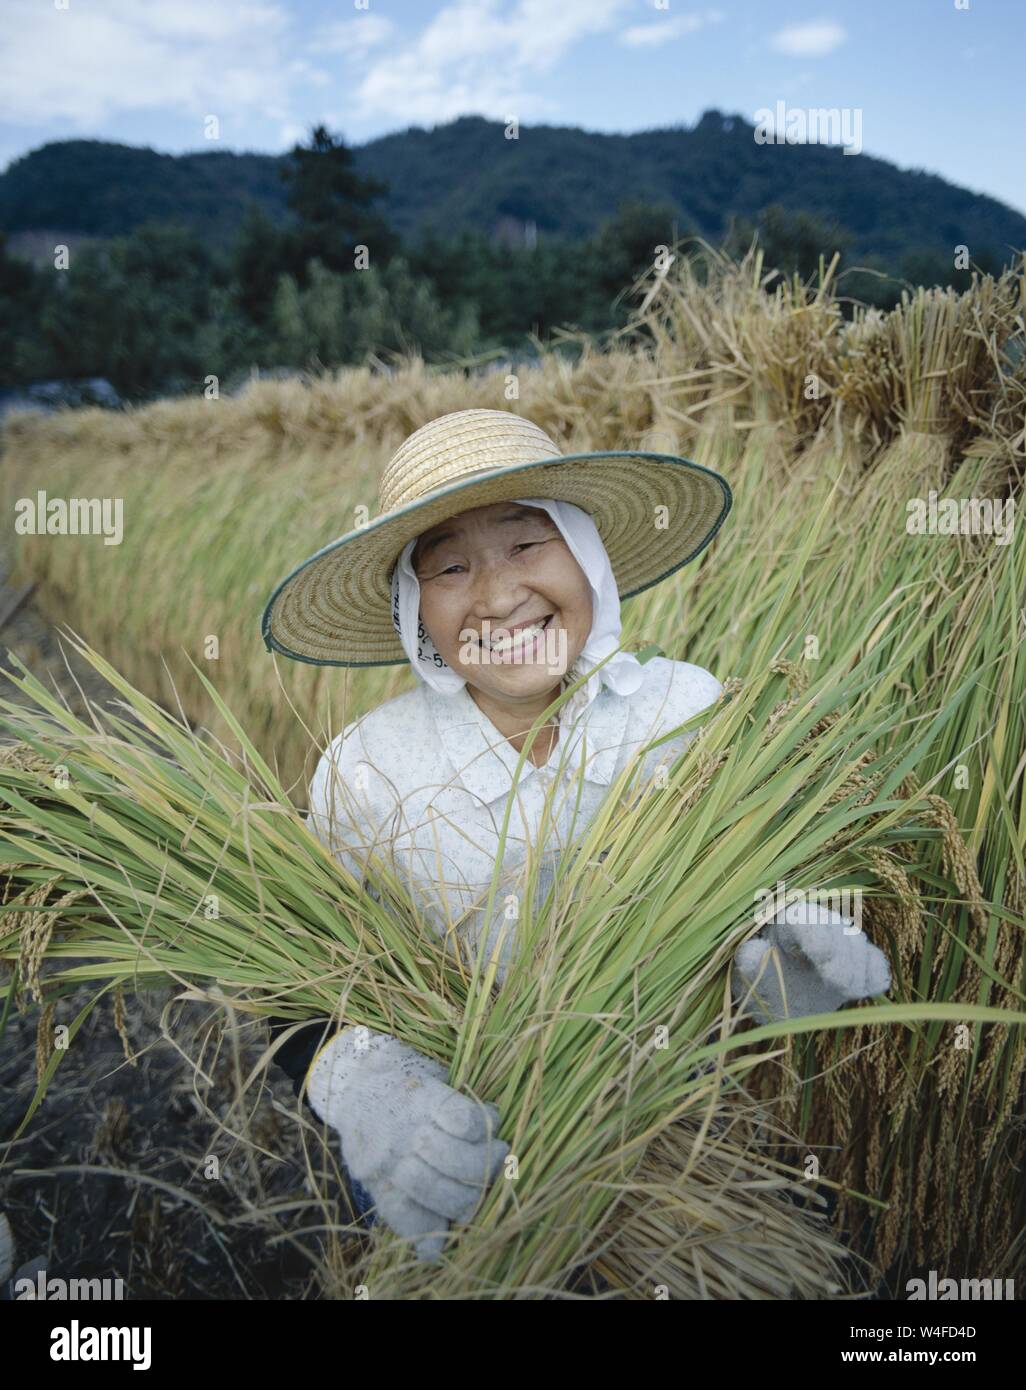 Japan, Honshu, Yamanashi Prefecture, Female Farmer Dressed in Traditional Farming Clothing Harvesting Rice Stock Photo